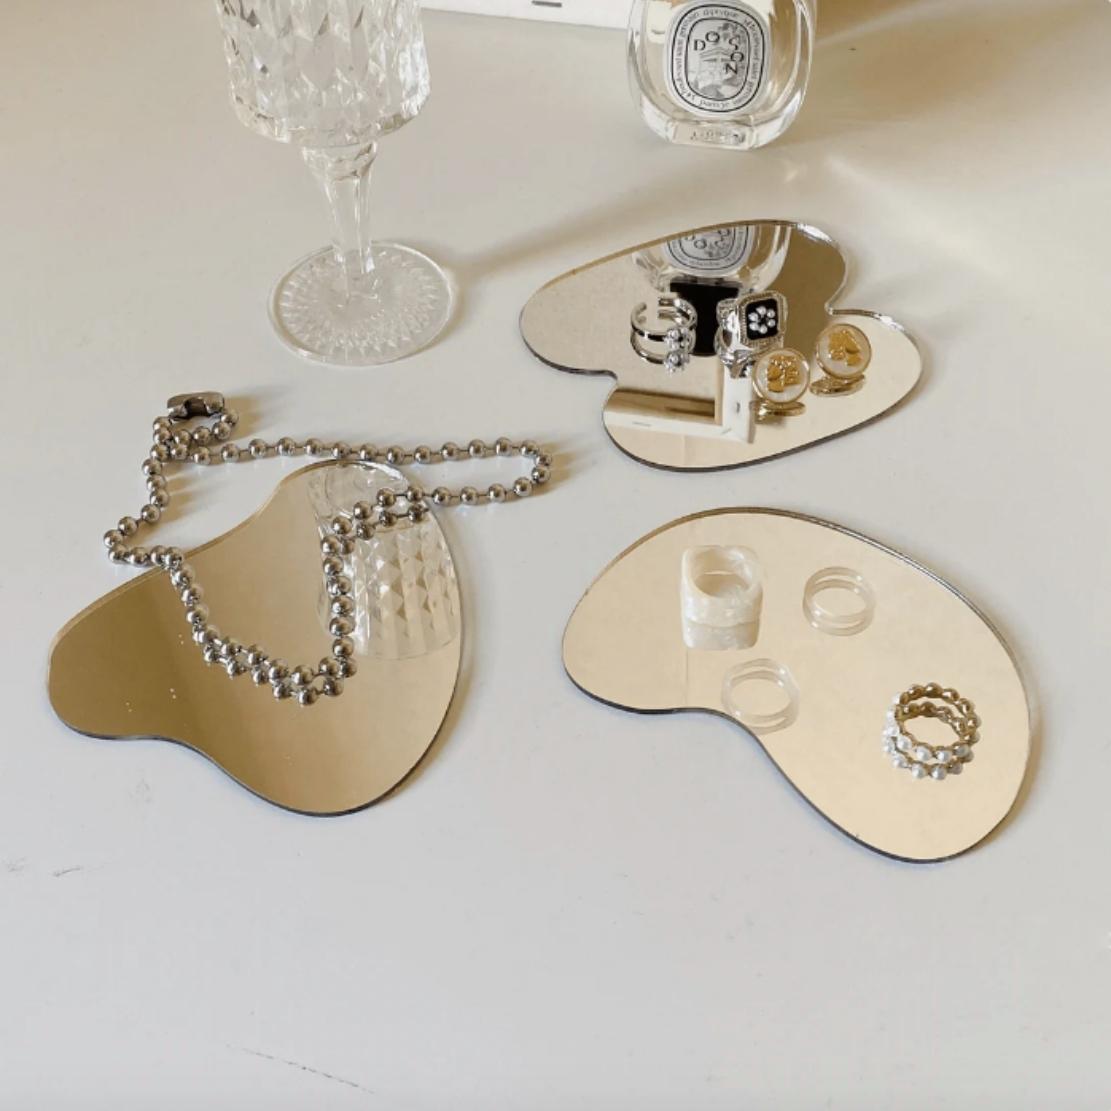 Asymmetrical silver mirror acrylic coaster / jewellery tray